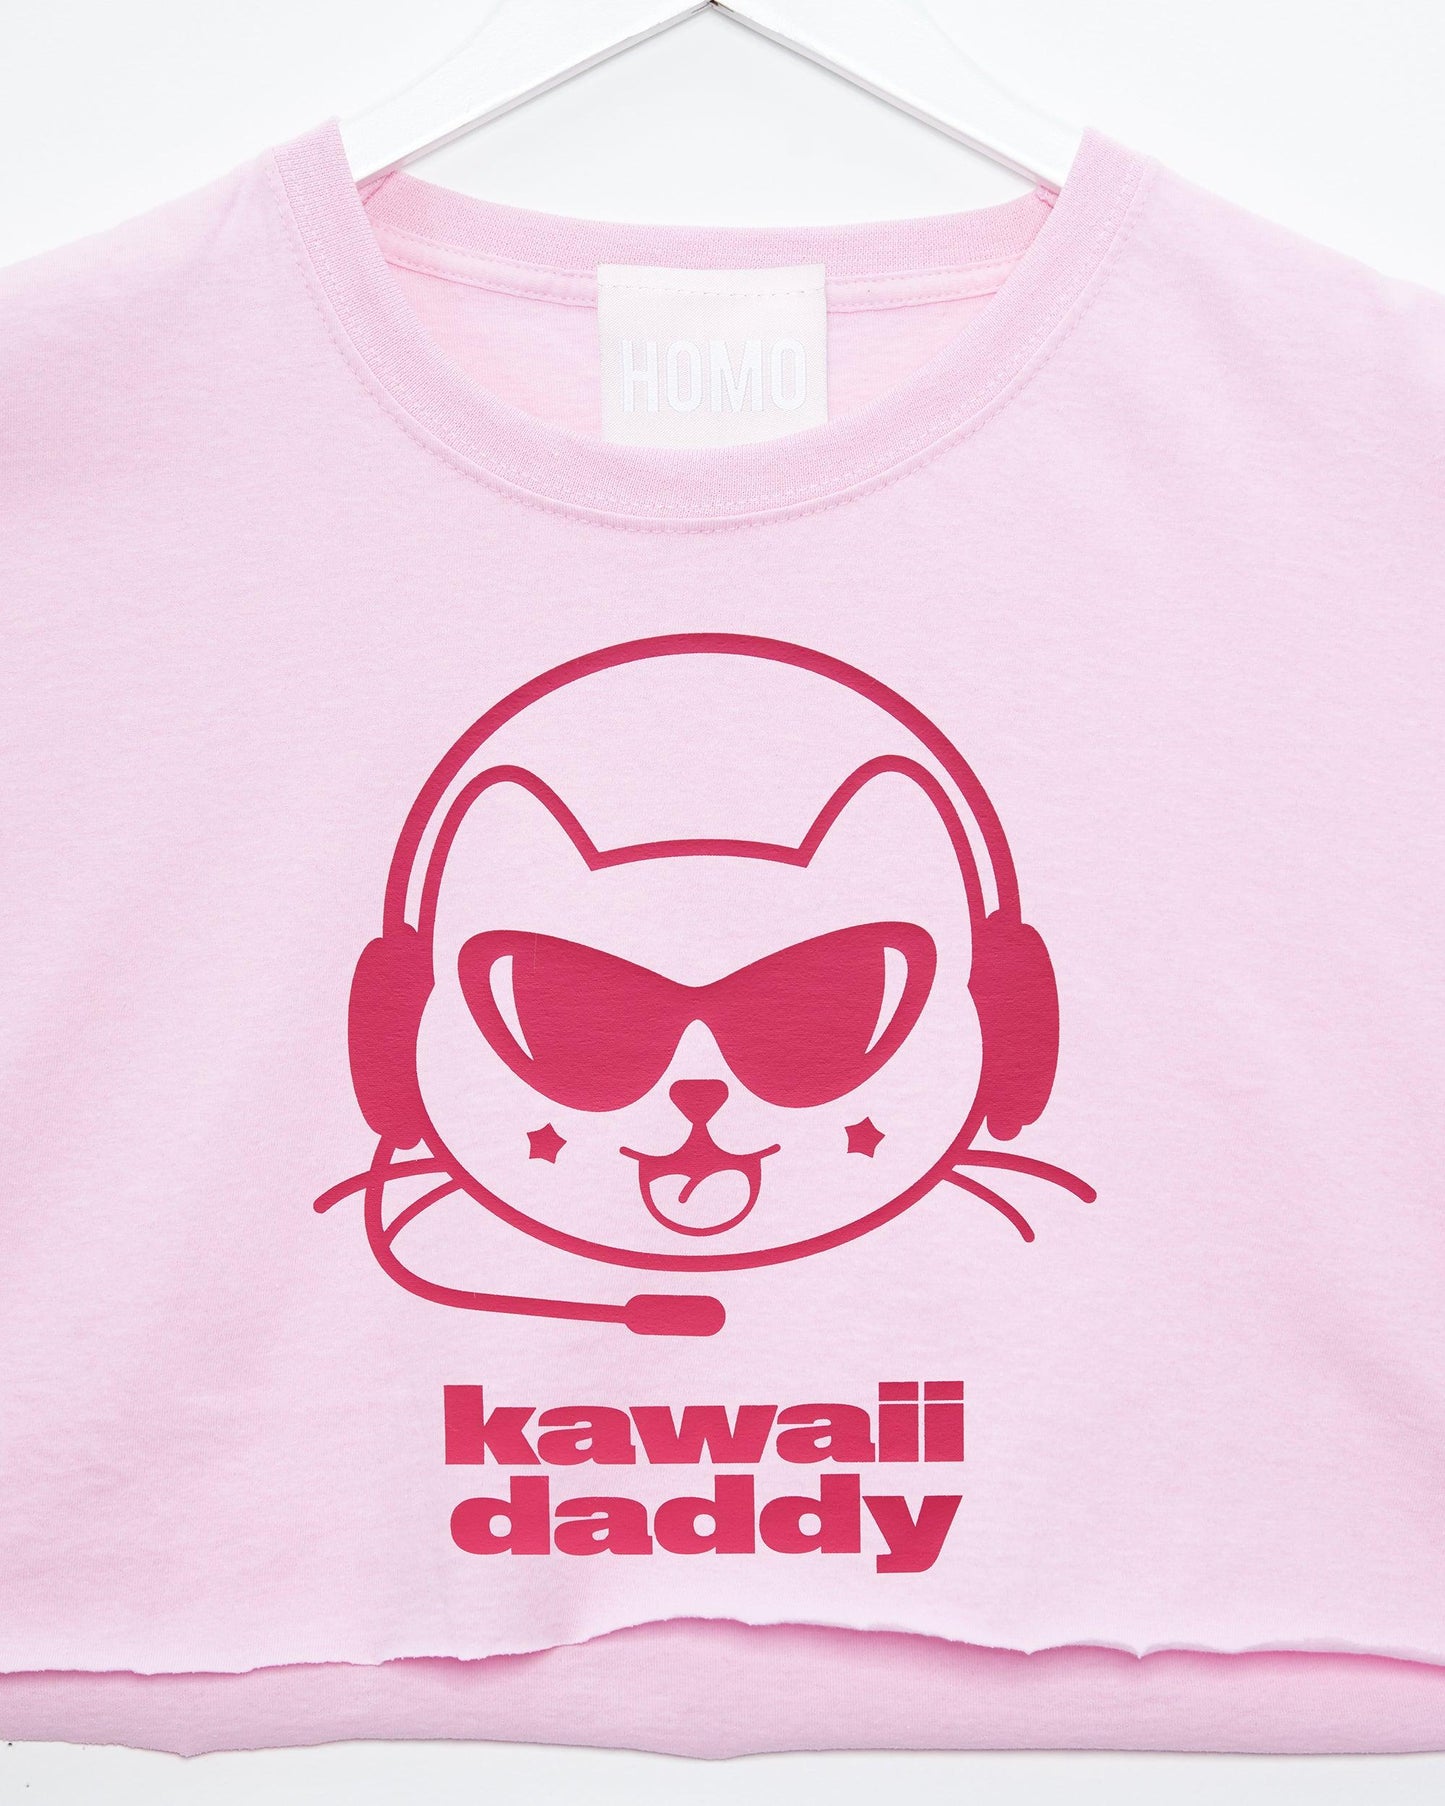 Kawaii daddy, fuchsia/pink - mens crop top - HOMOLONDON